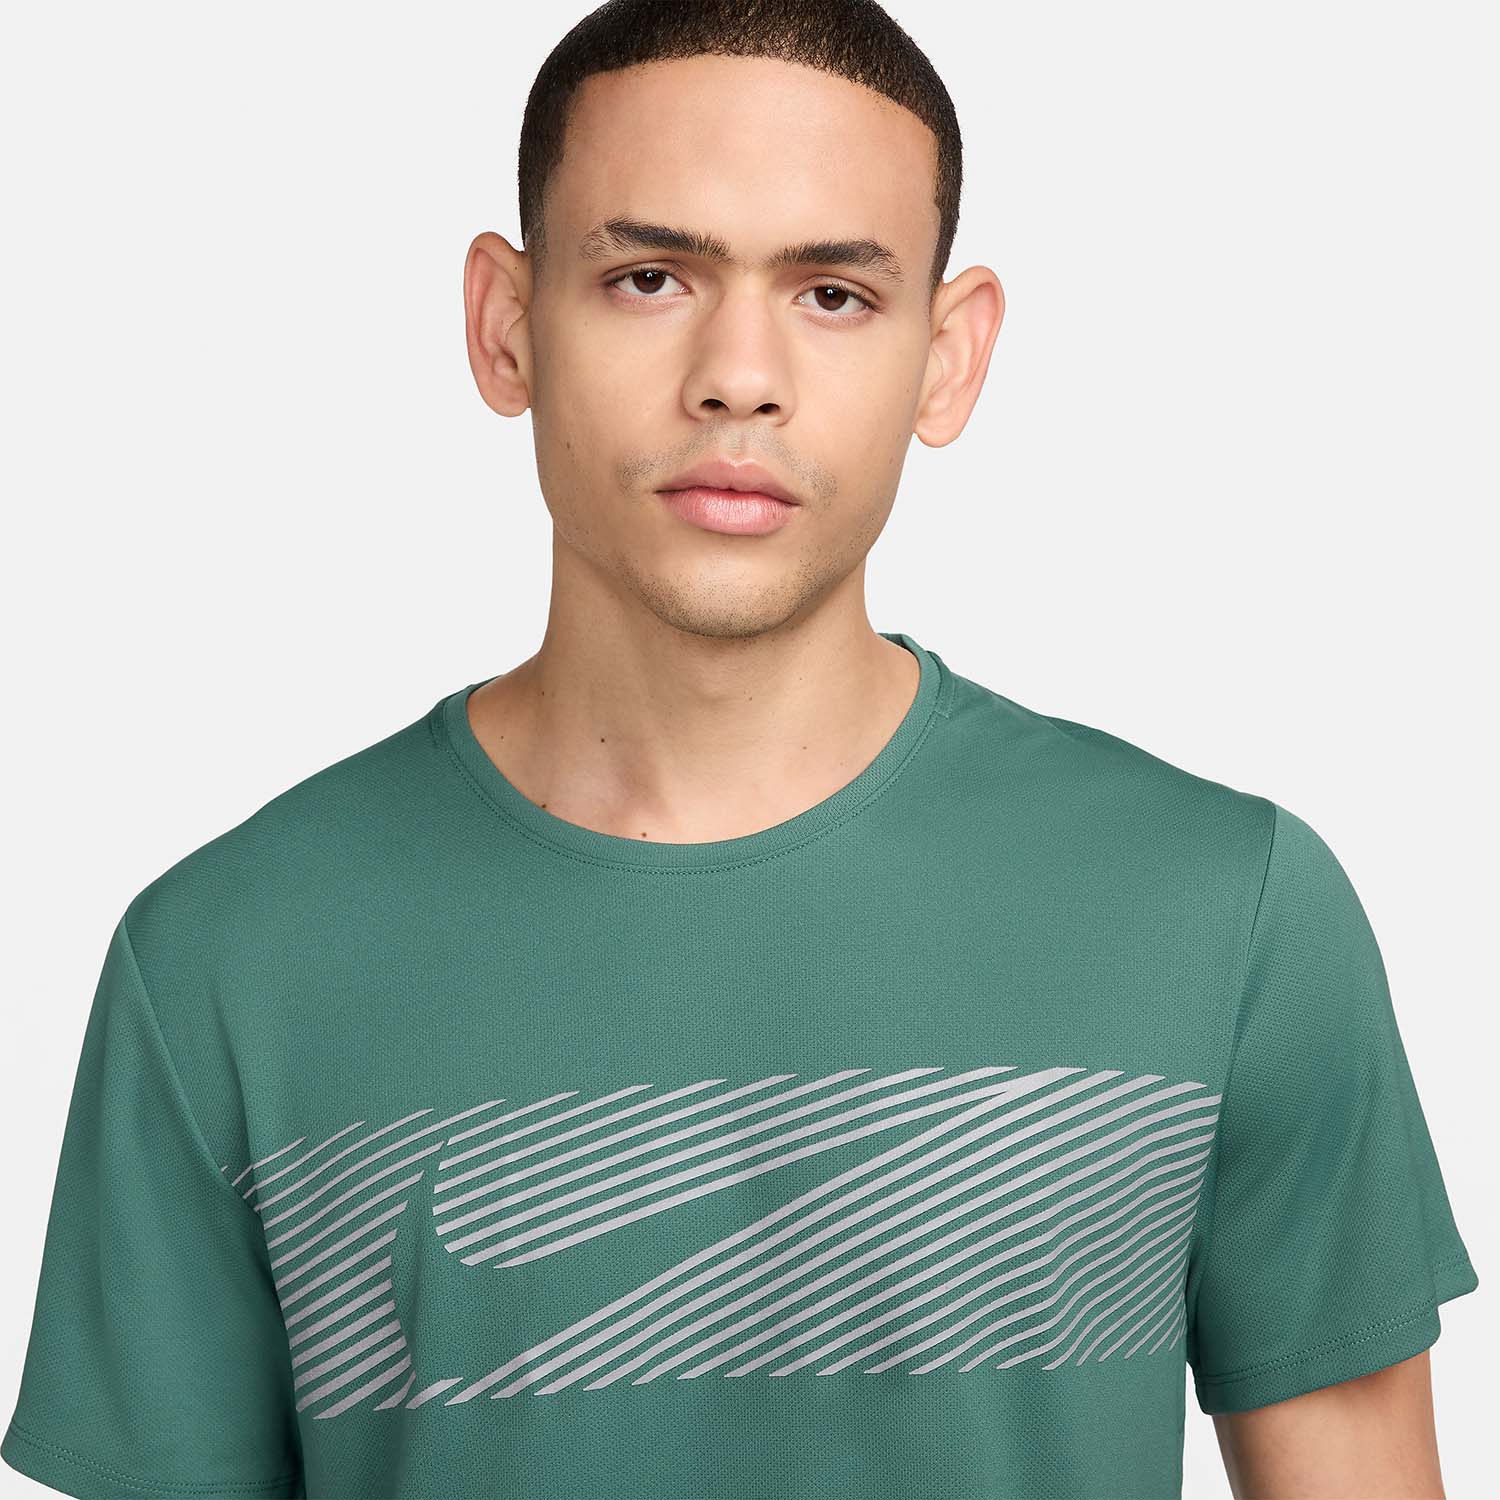 Nike Miler Flash T-Shirt - Bicoastal/Reflective Silver